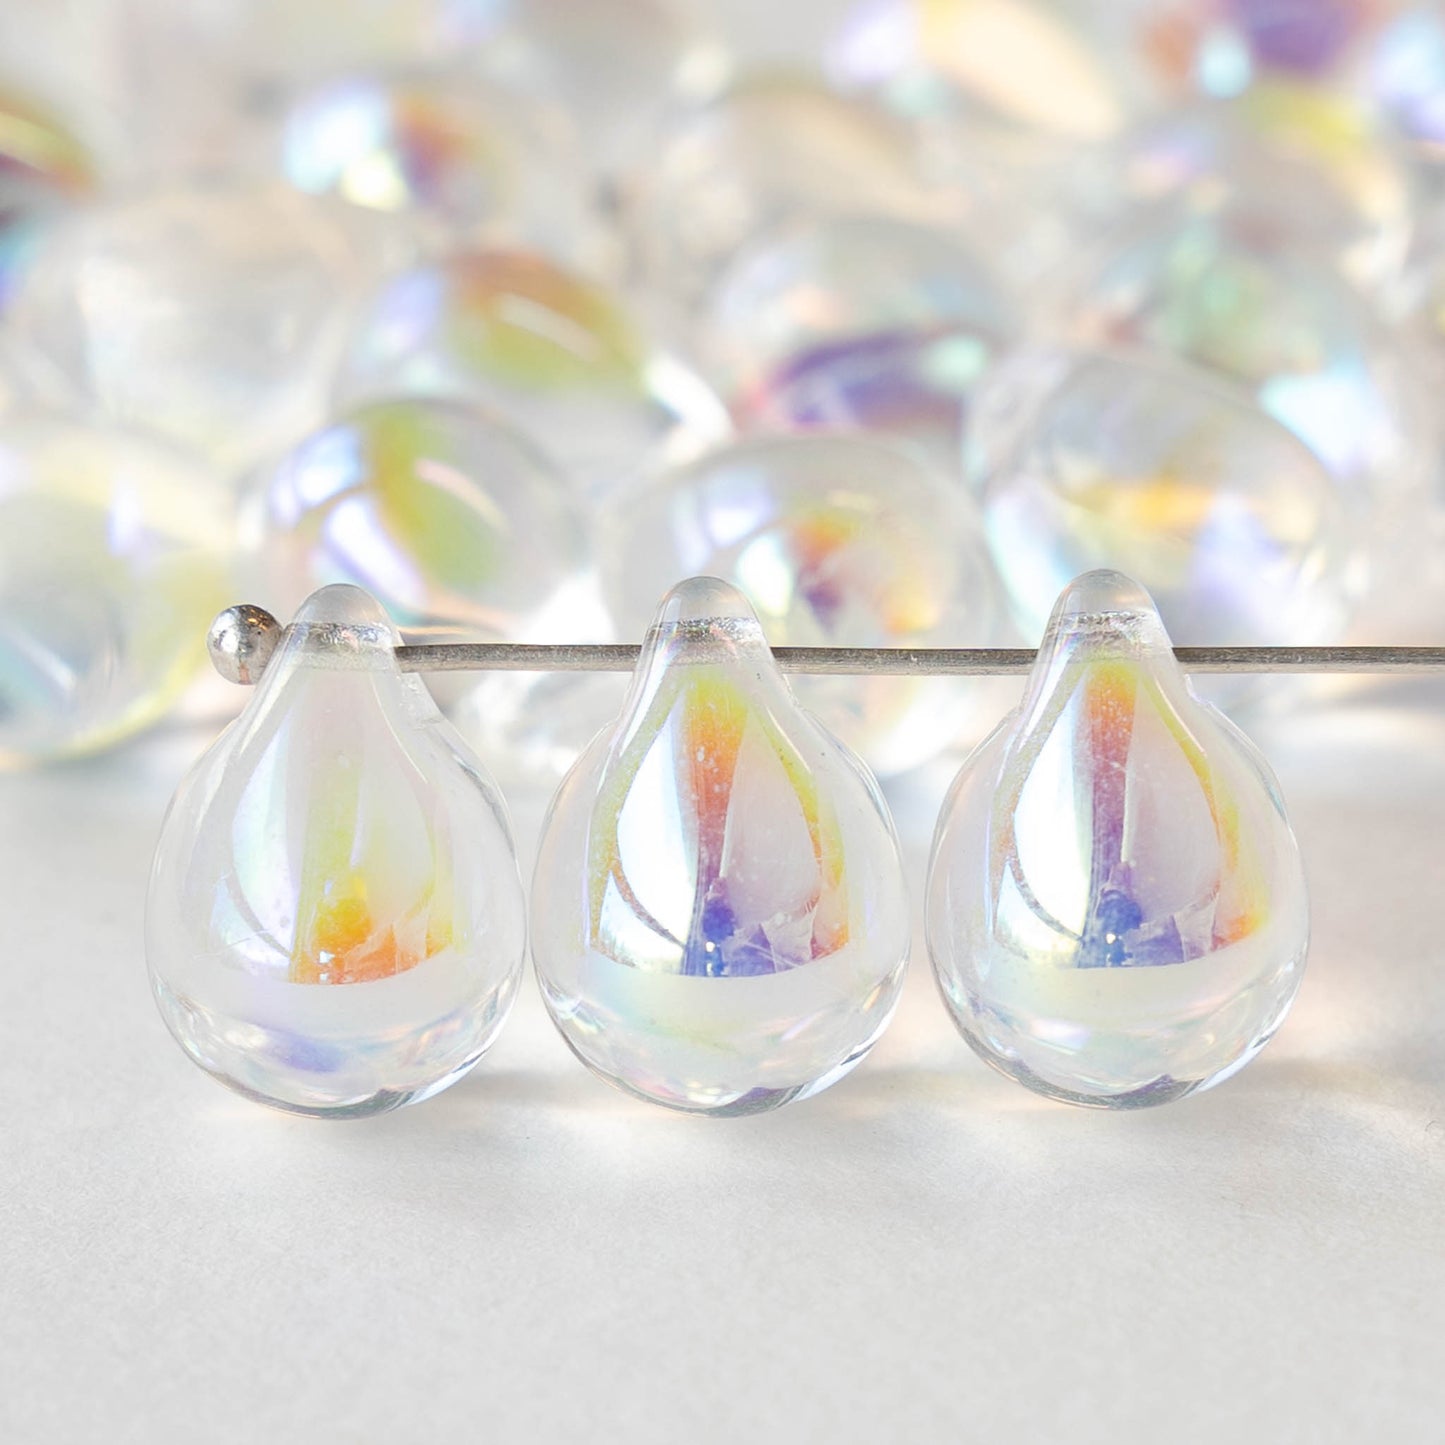 10x14mm Glass Teardrop Beads - Crystal AB